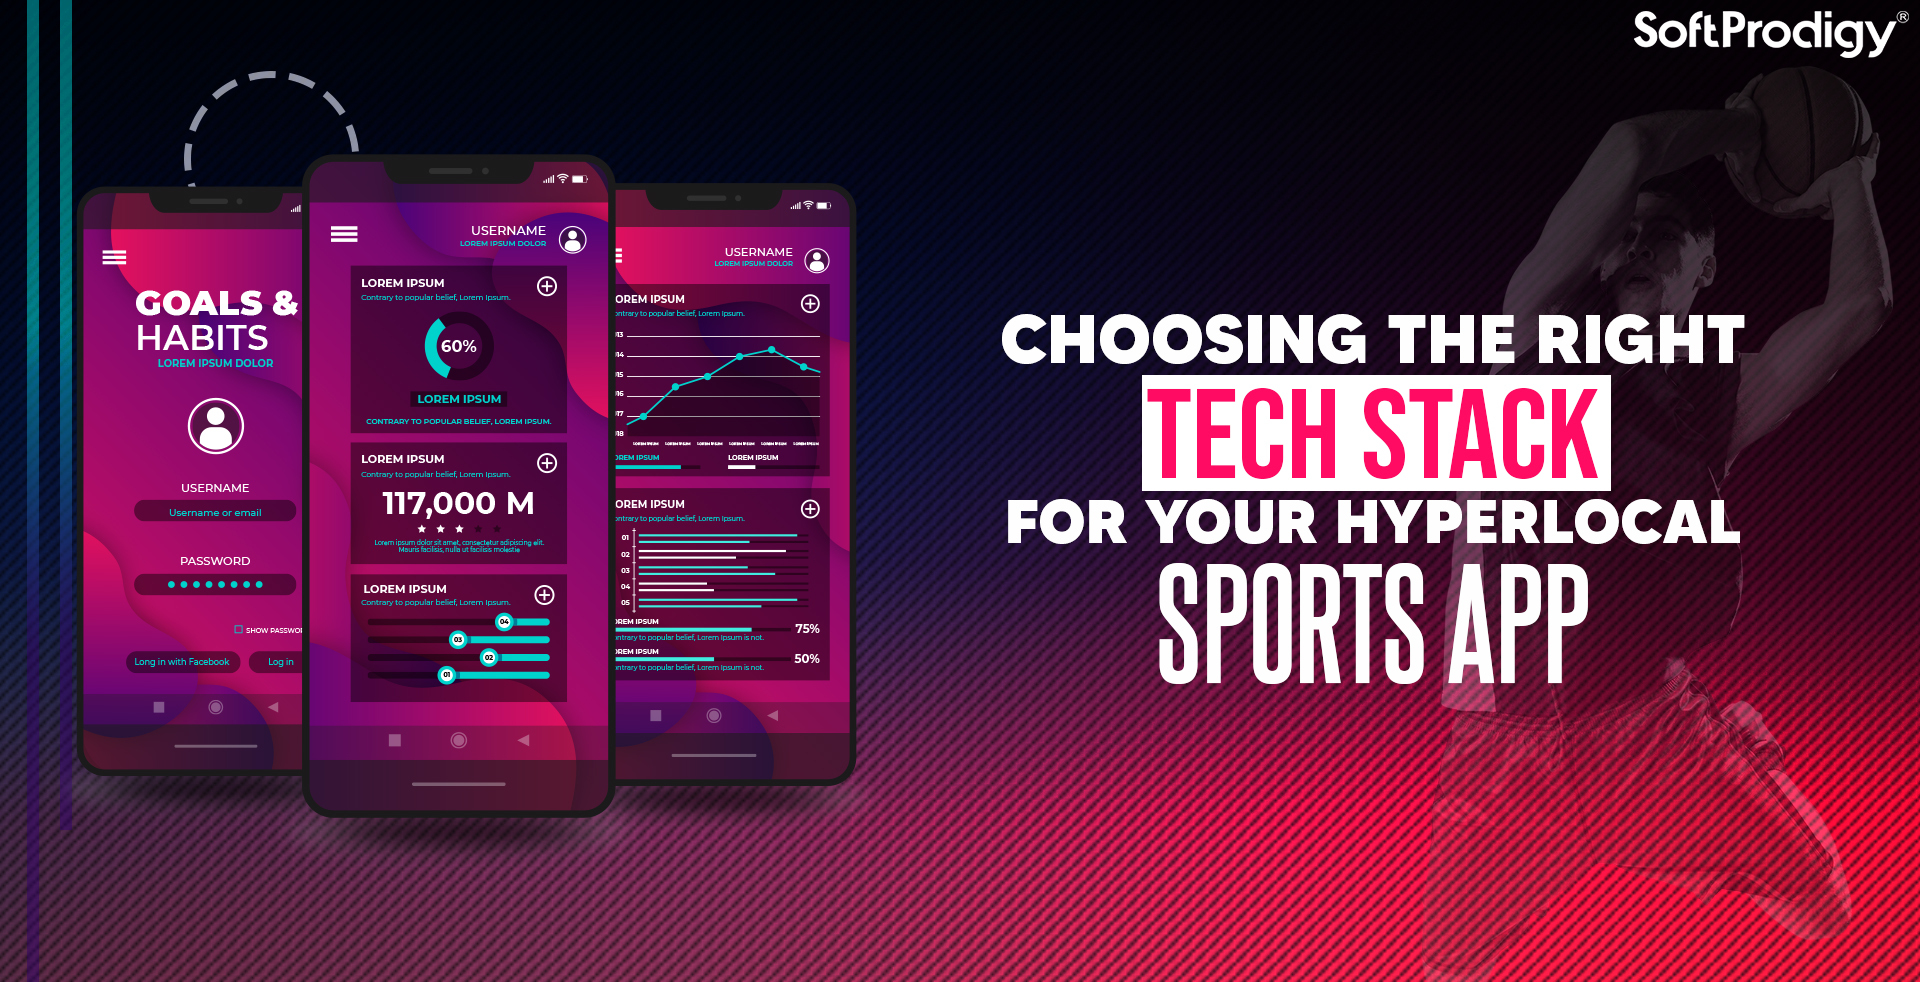 Best Sports Mobile Apps for Development Inspiration